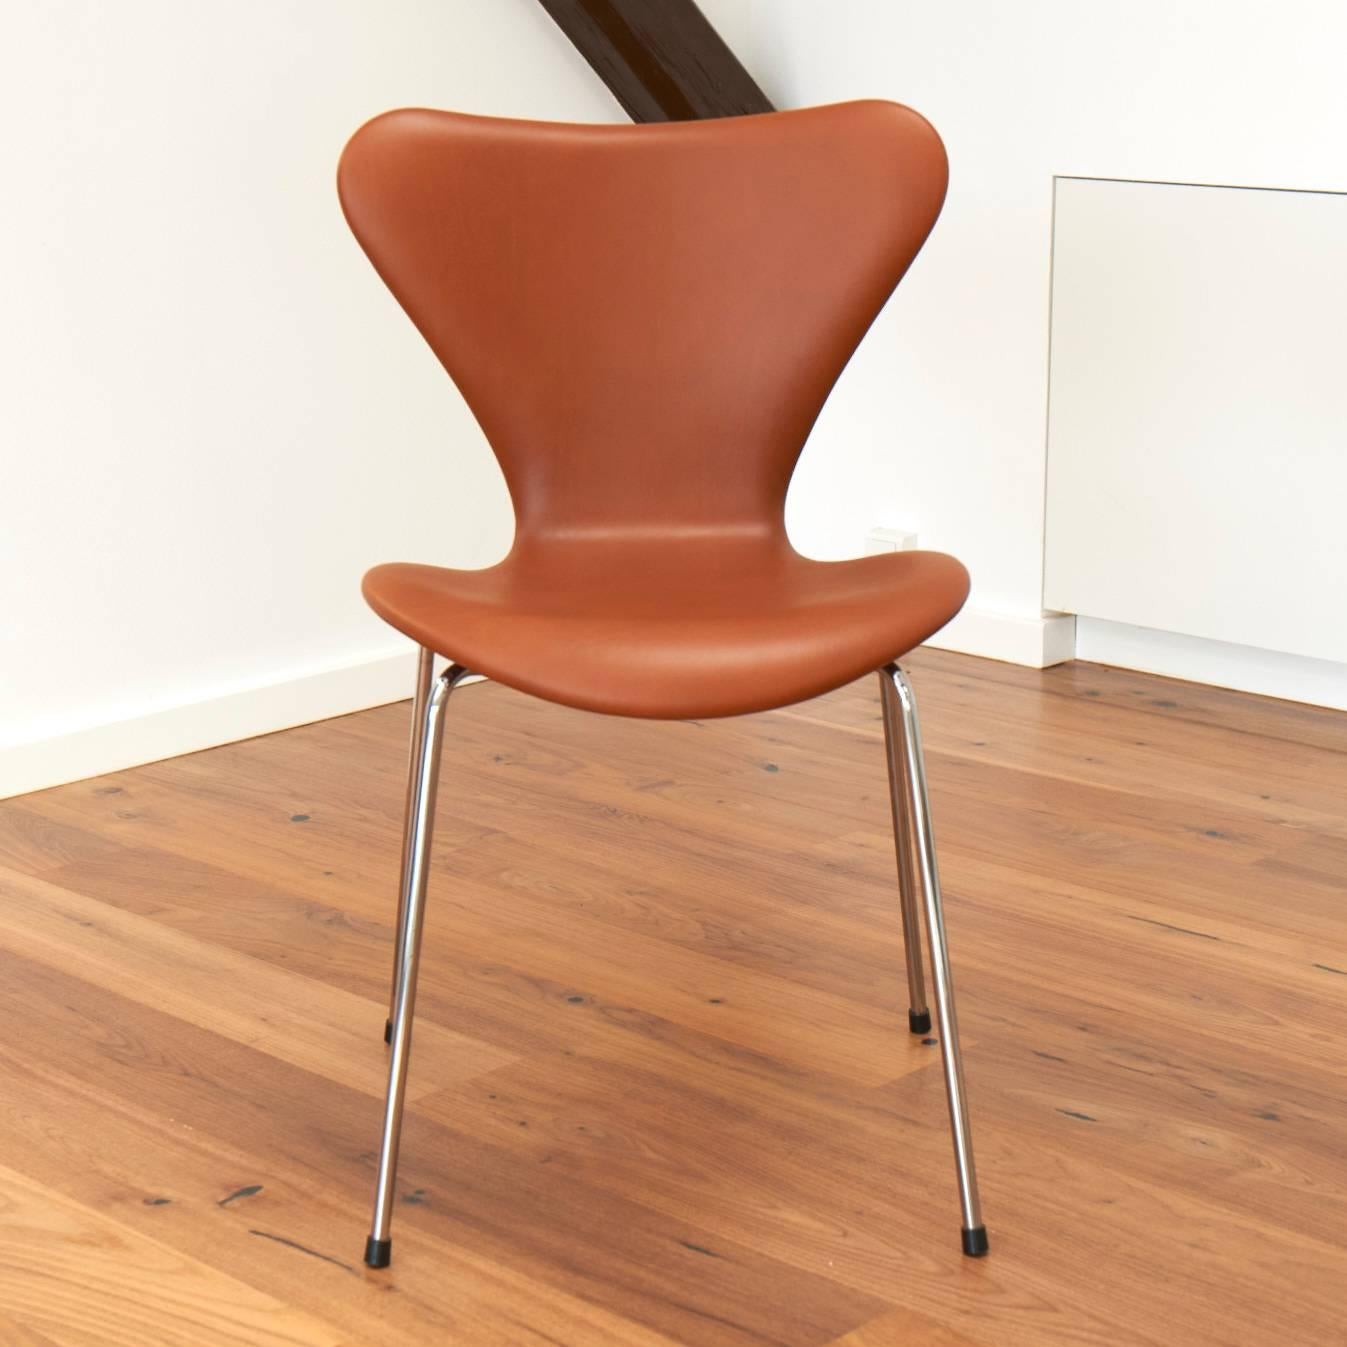 Six pieces new Arne Jacobsen 3107 in walnut elegance leather.
Manufactured by Fritz Hansen.